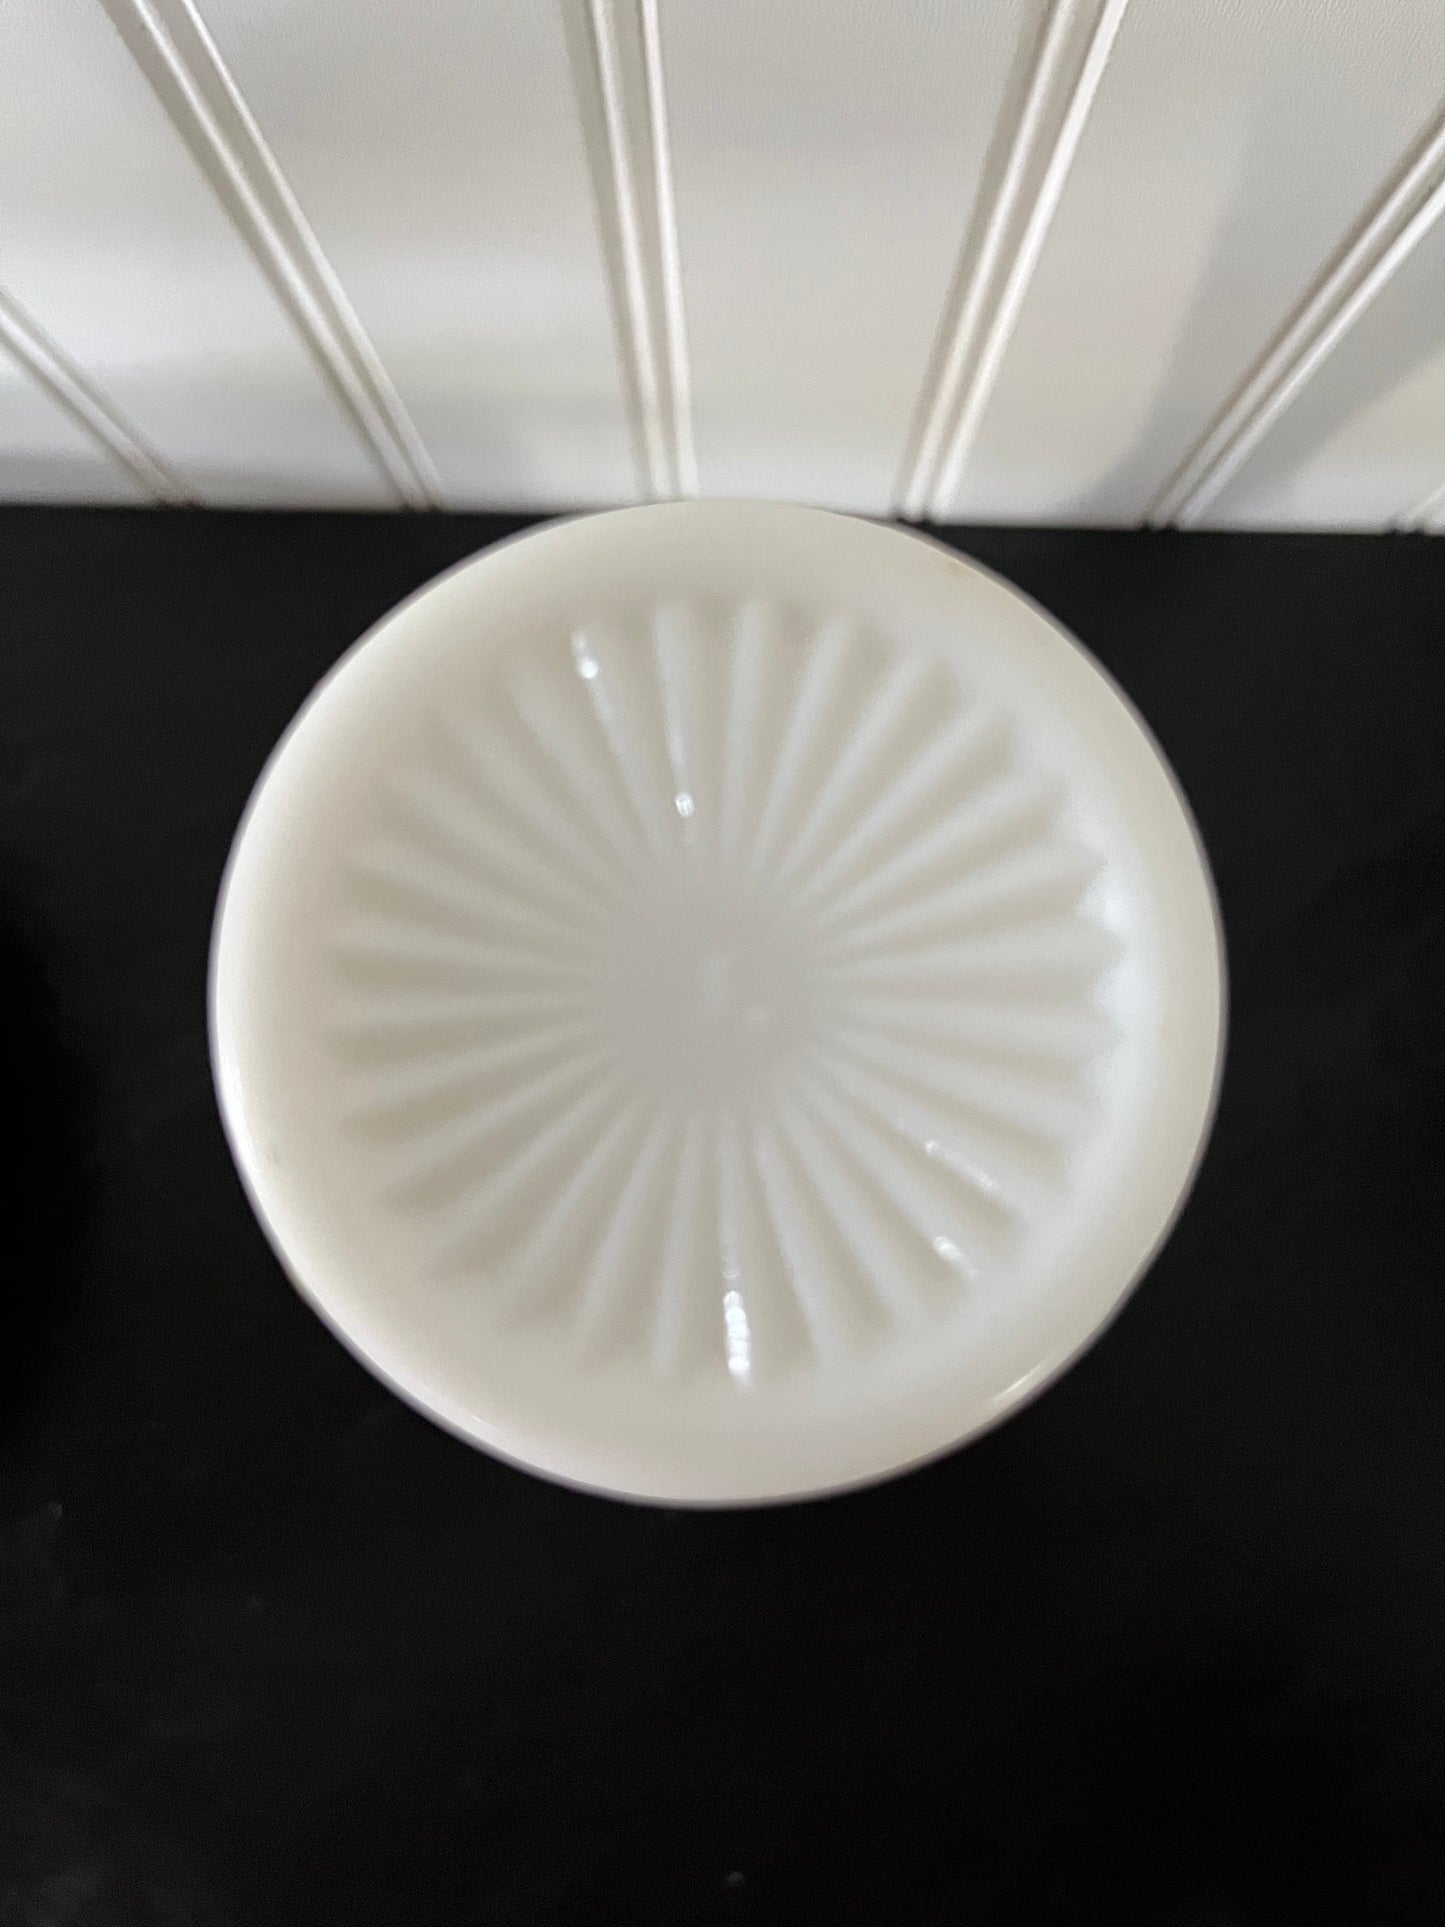 Vintage Milk Glass Starburst Cut Pattern Bud Vase - 9" high